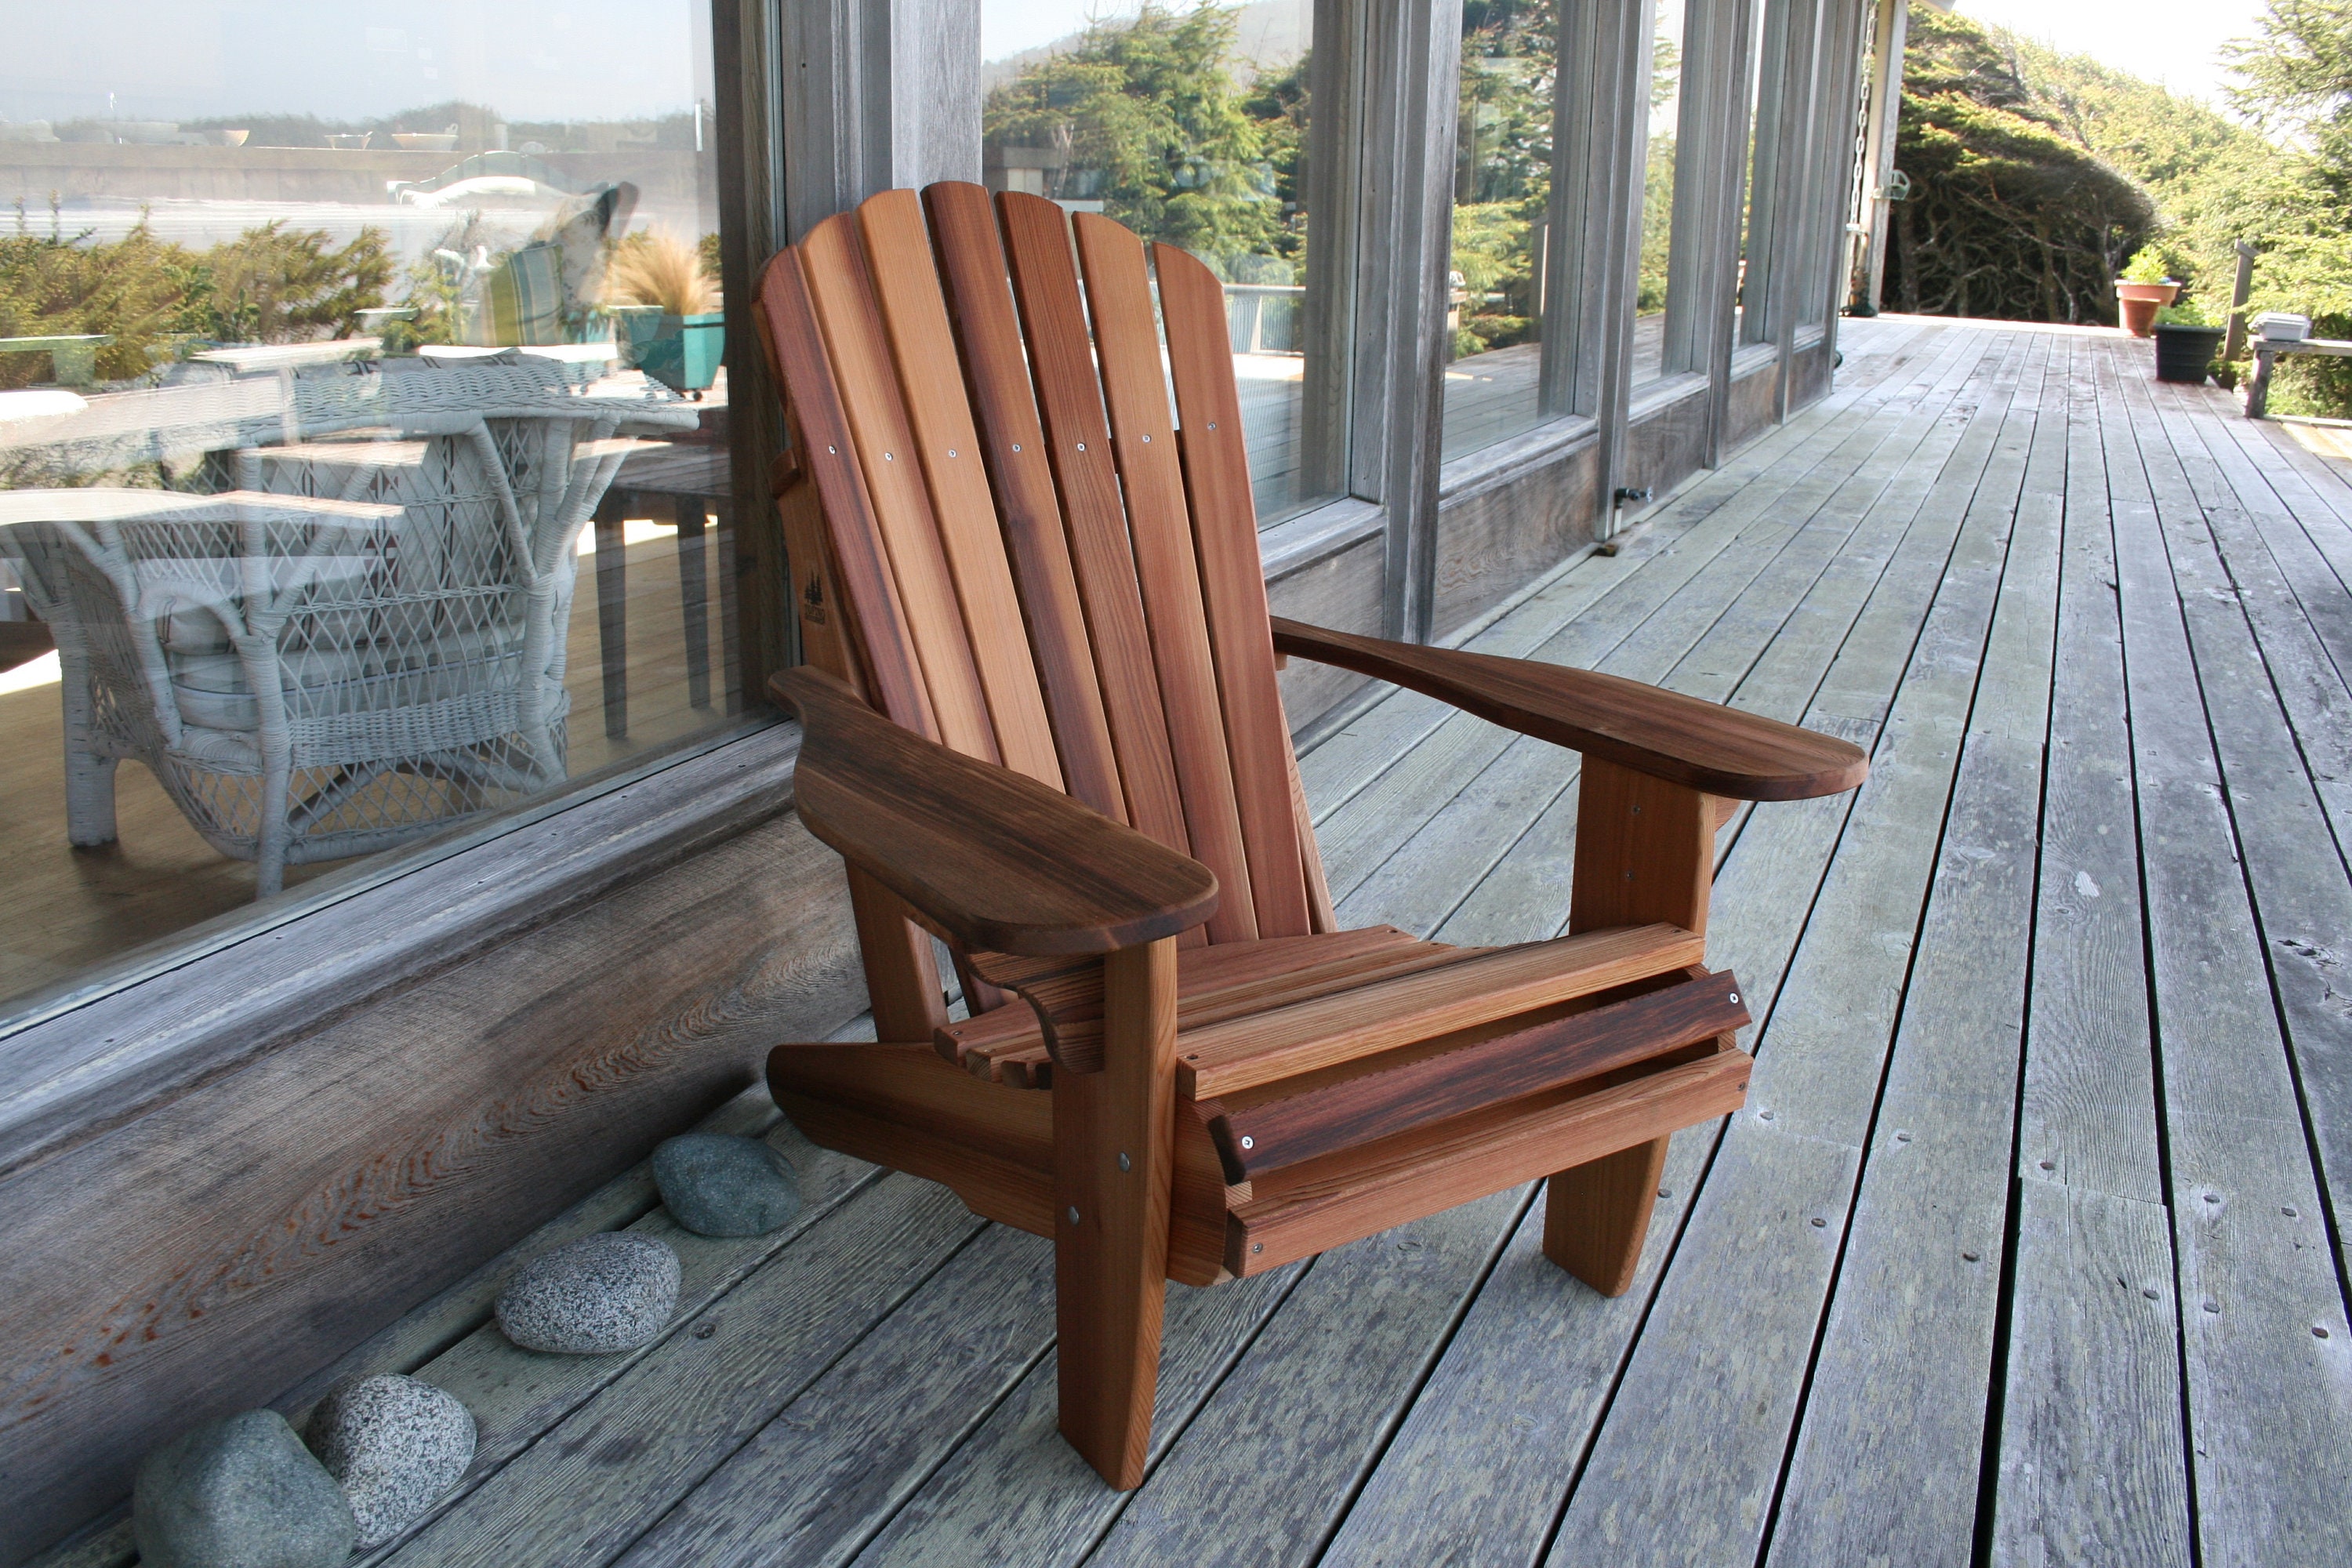 Cedar American Forest Adirondack Chair & Footrest Set Natural